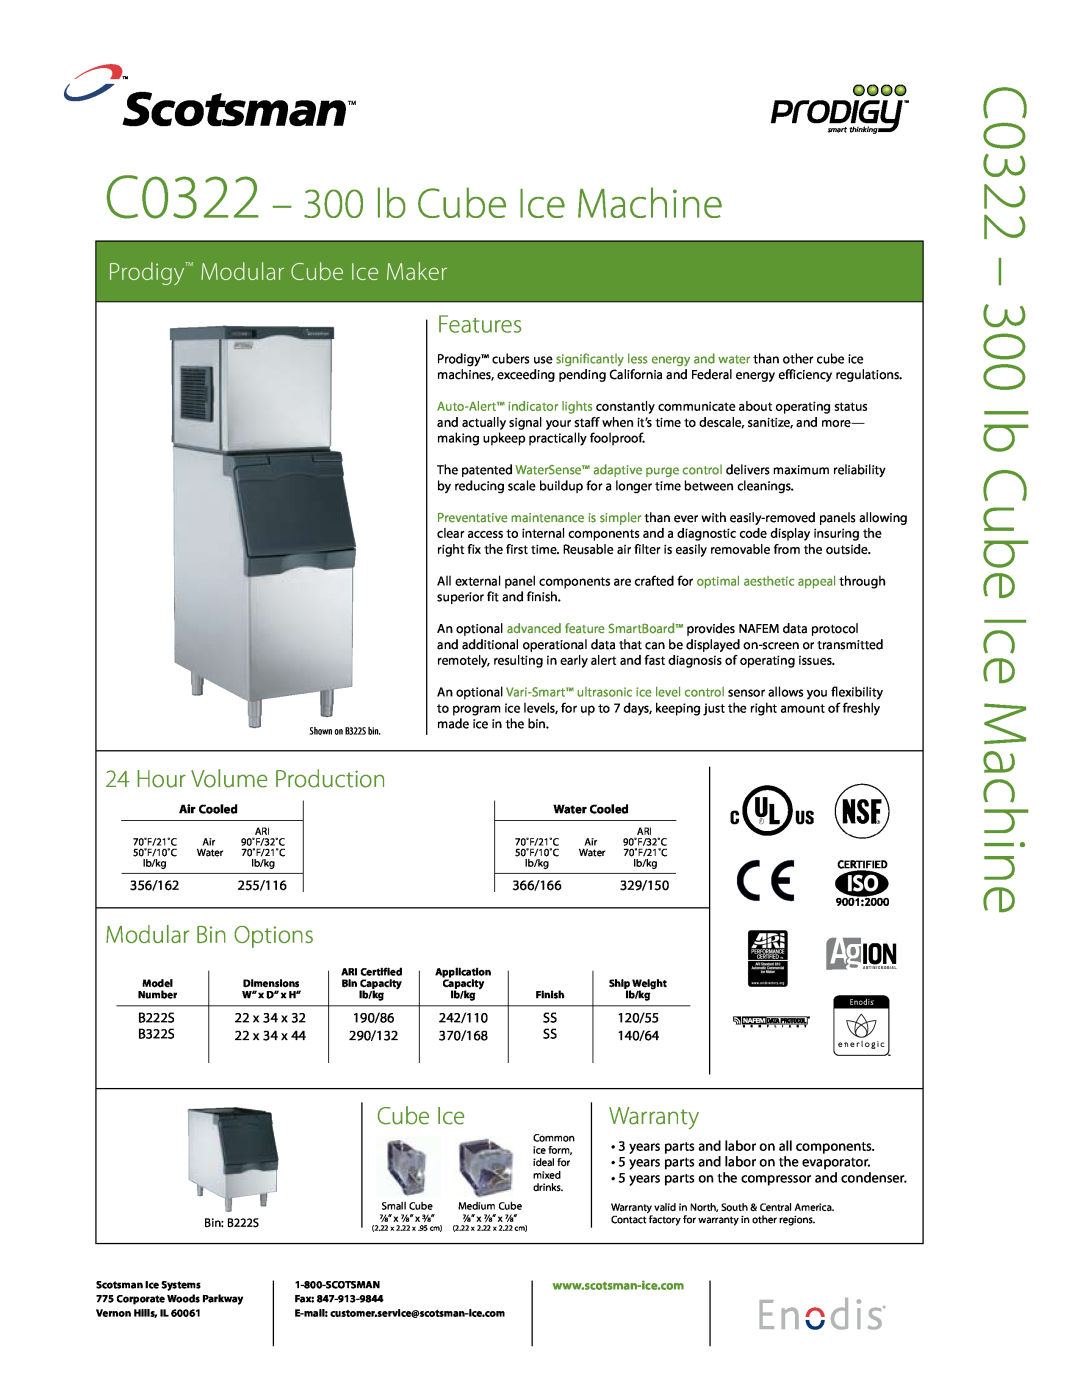 Scotsman Ice C0322 warranty Machine, Features, Hour Volume Production, Modular Bin Options, Cube Ice, Warranty, 190/86 